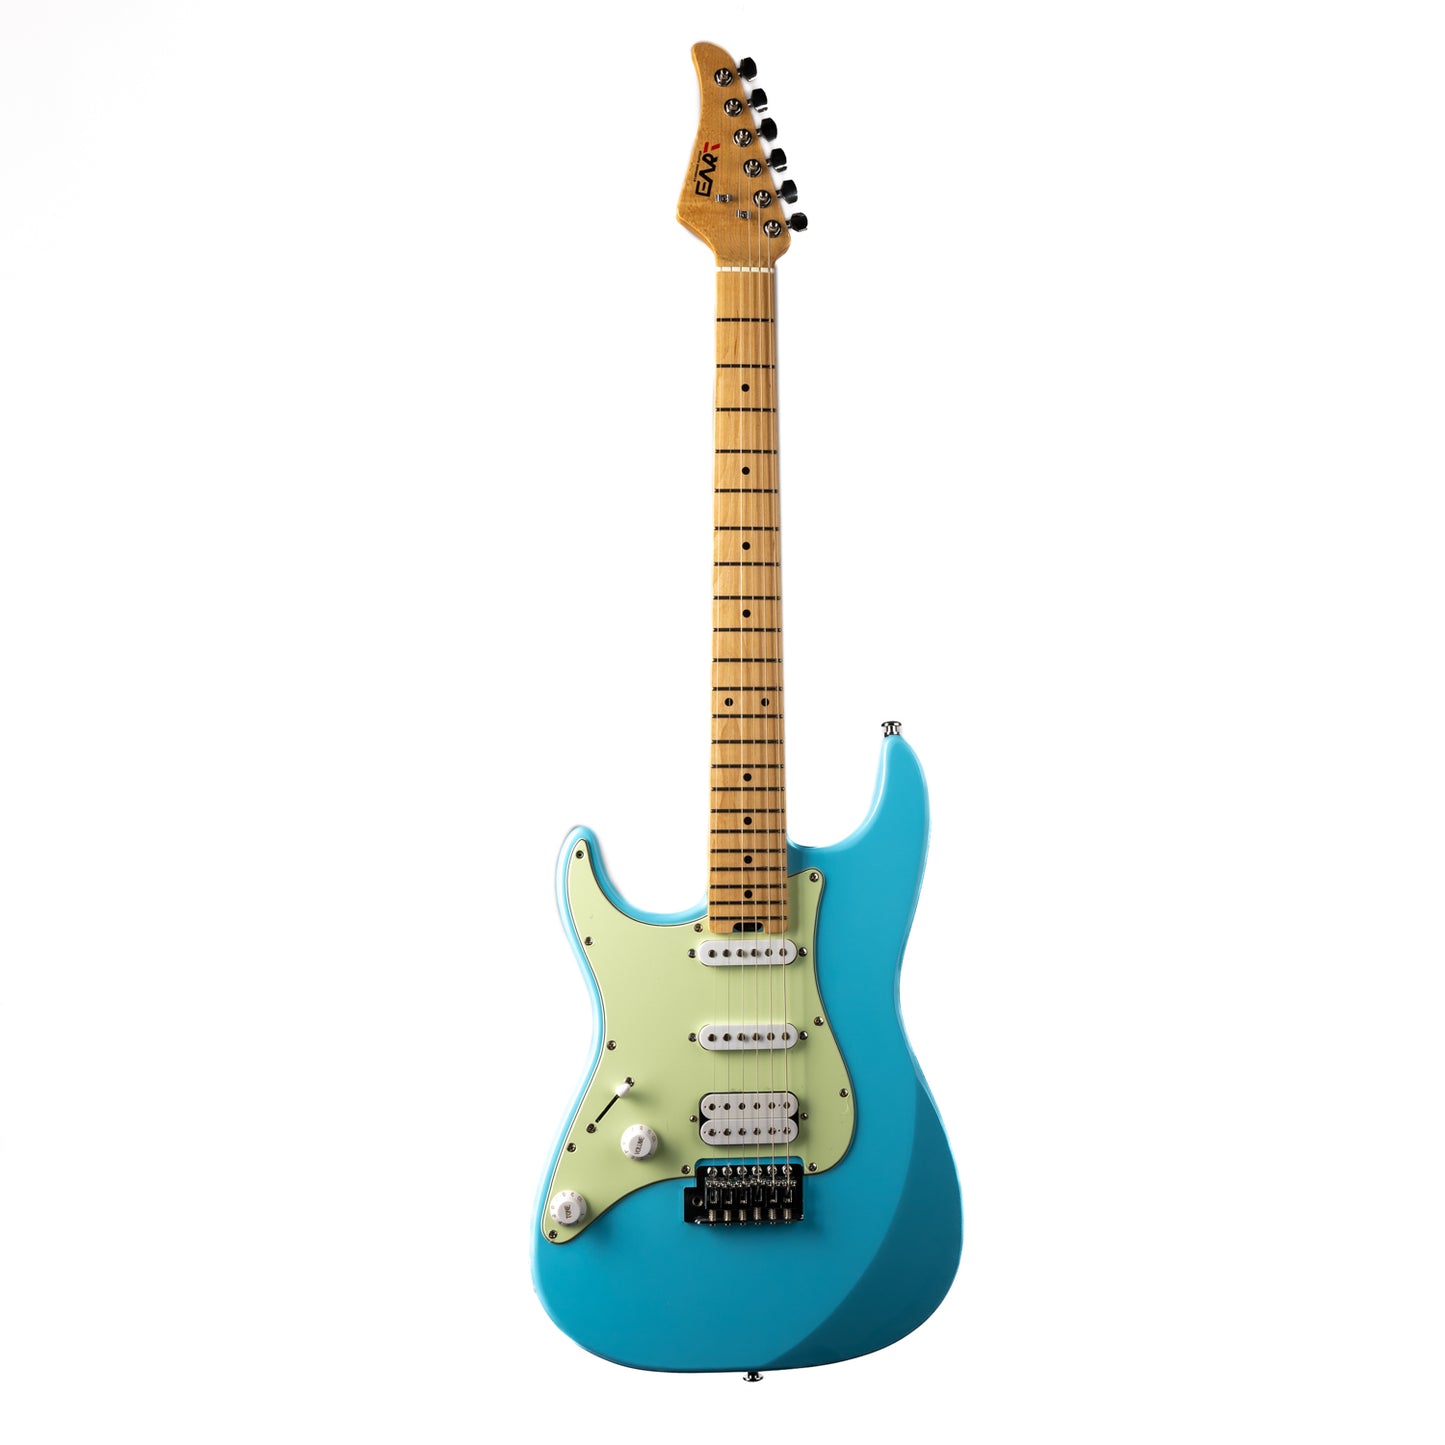 EART electric guitar E-1 model